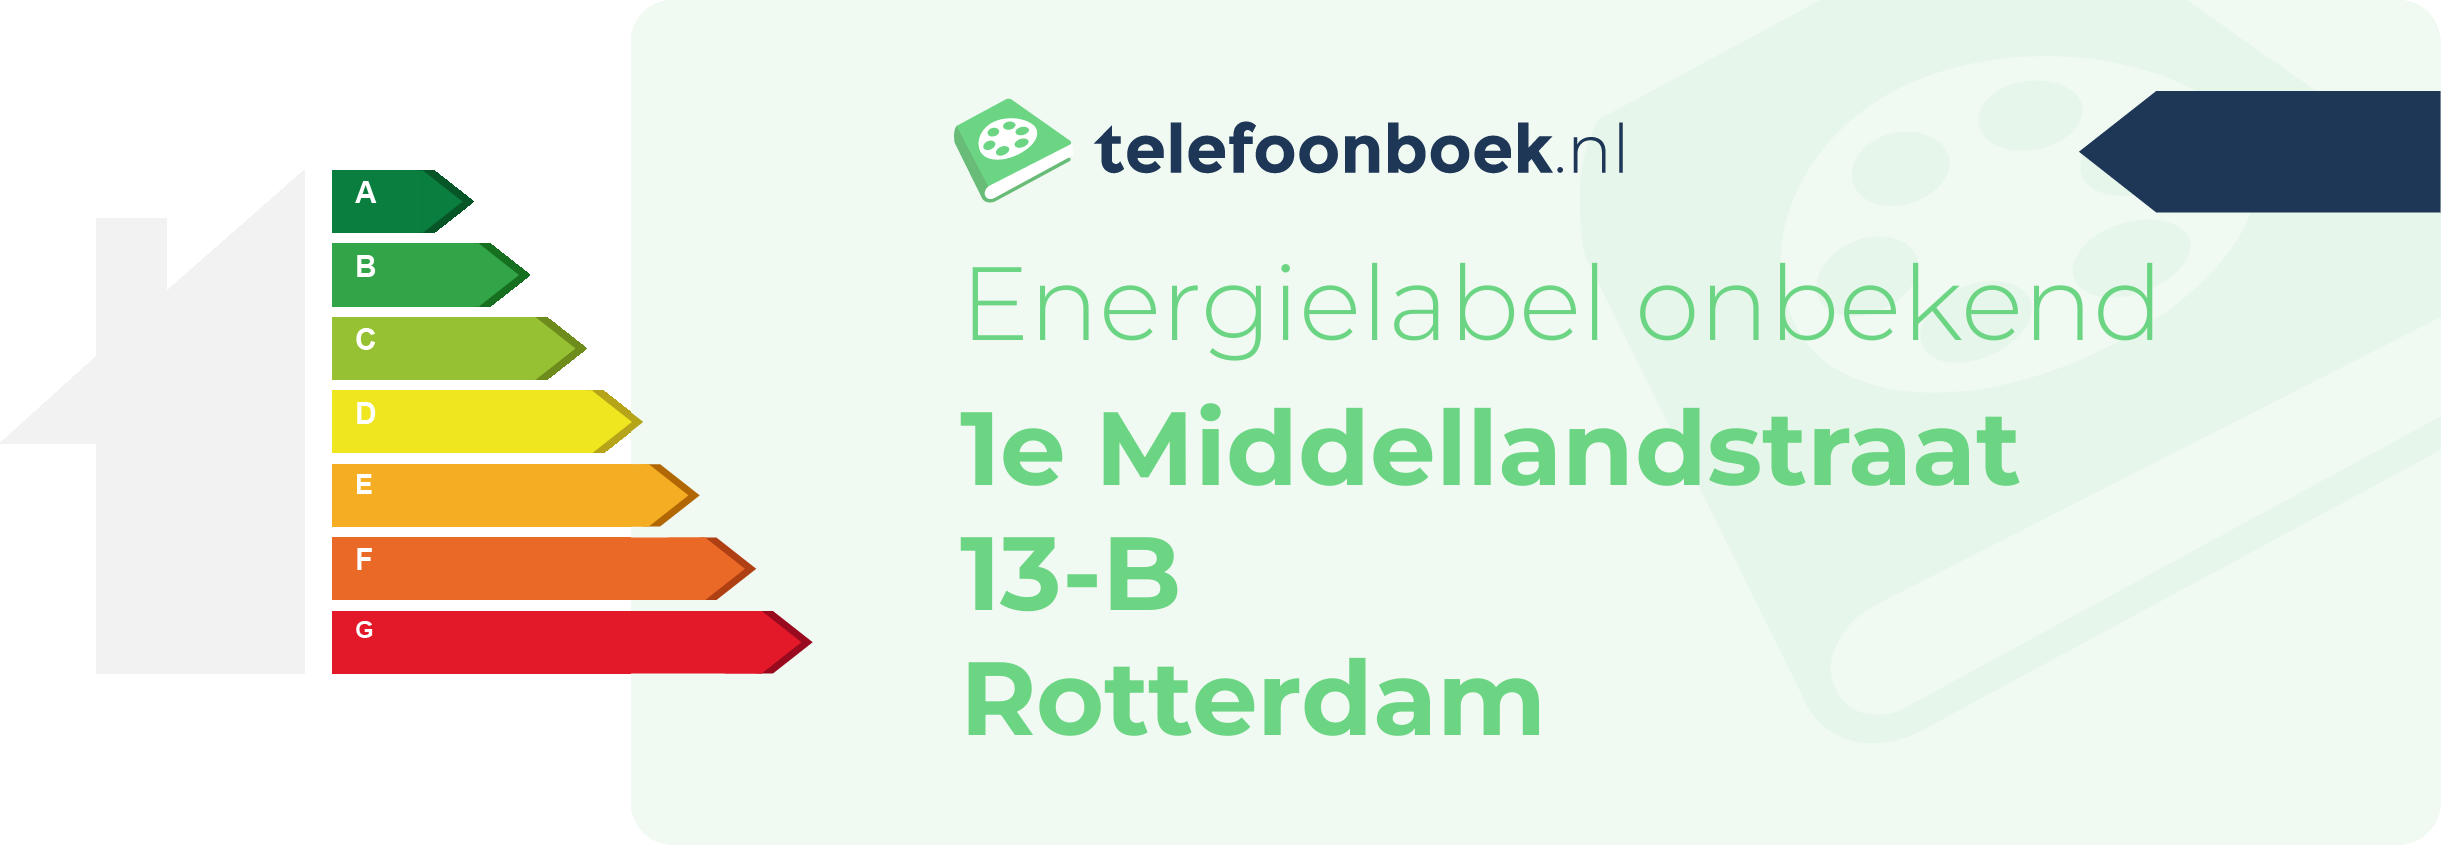 Energielabel 1e Middellandstraat 13-B Rotterdam